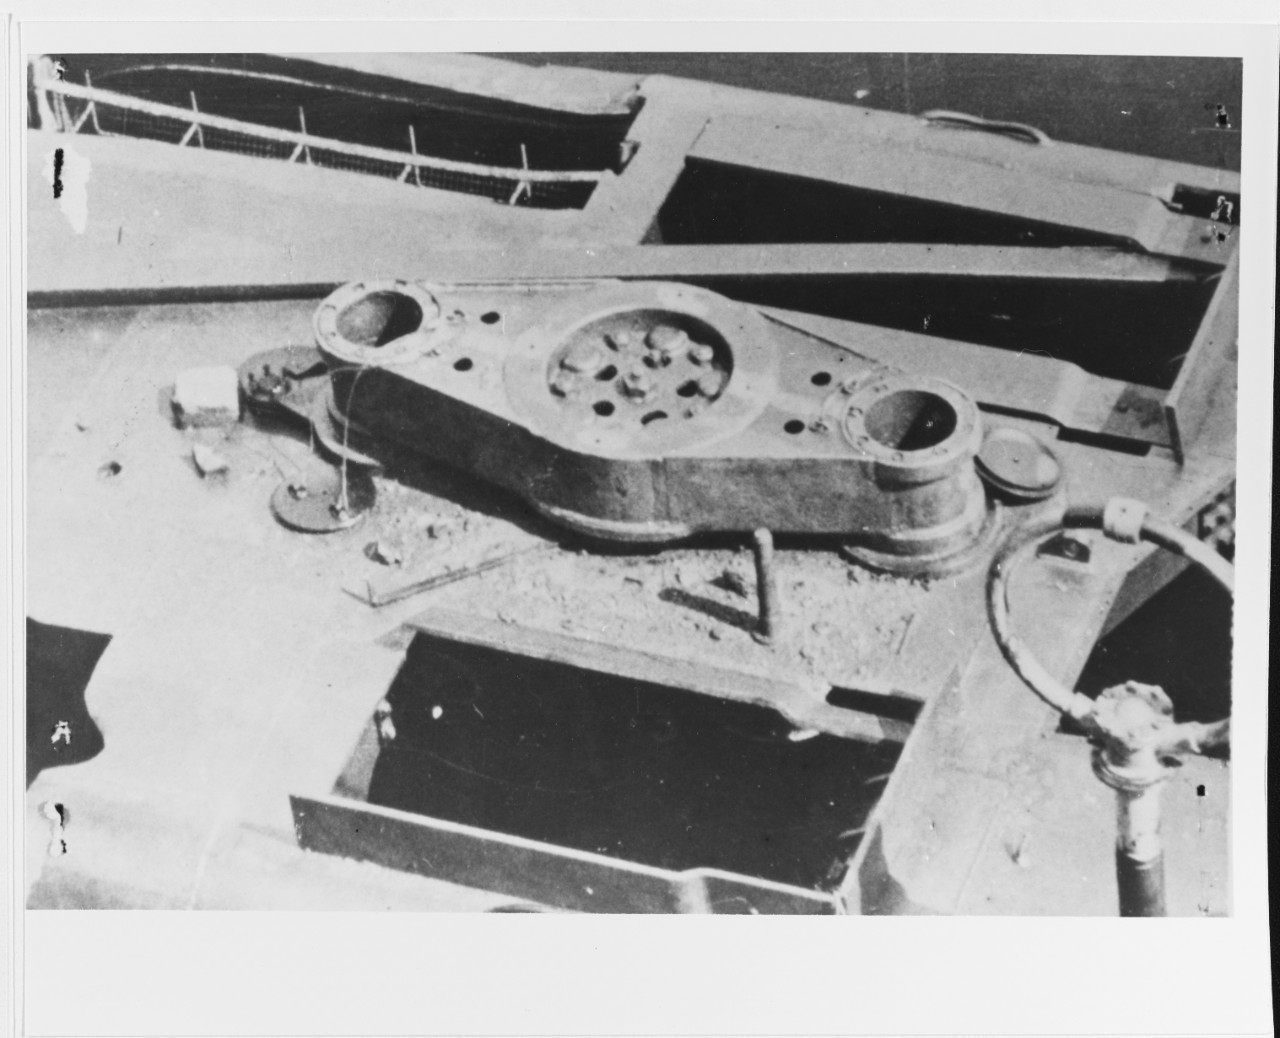 German U-boat periscope cross piece, including periscope bearings